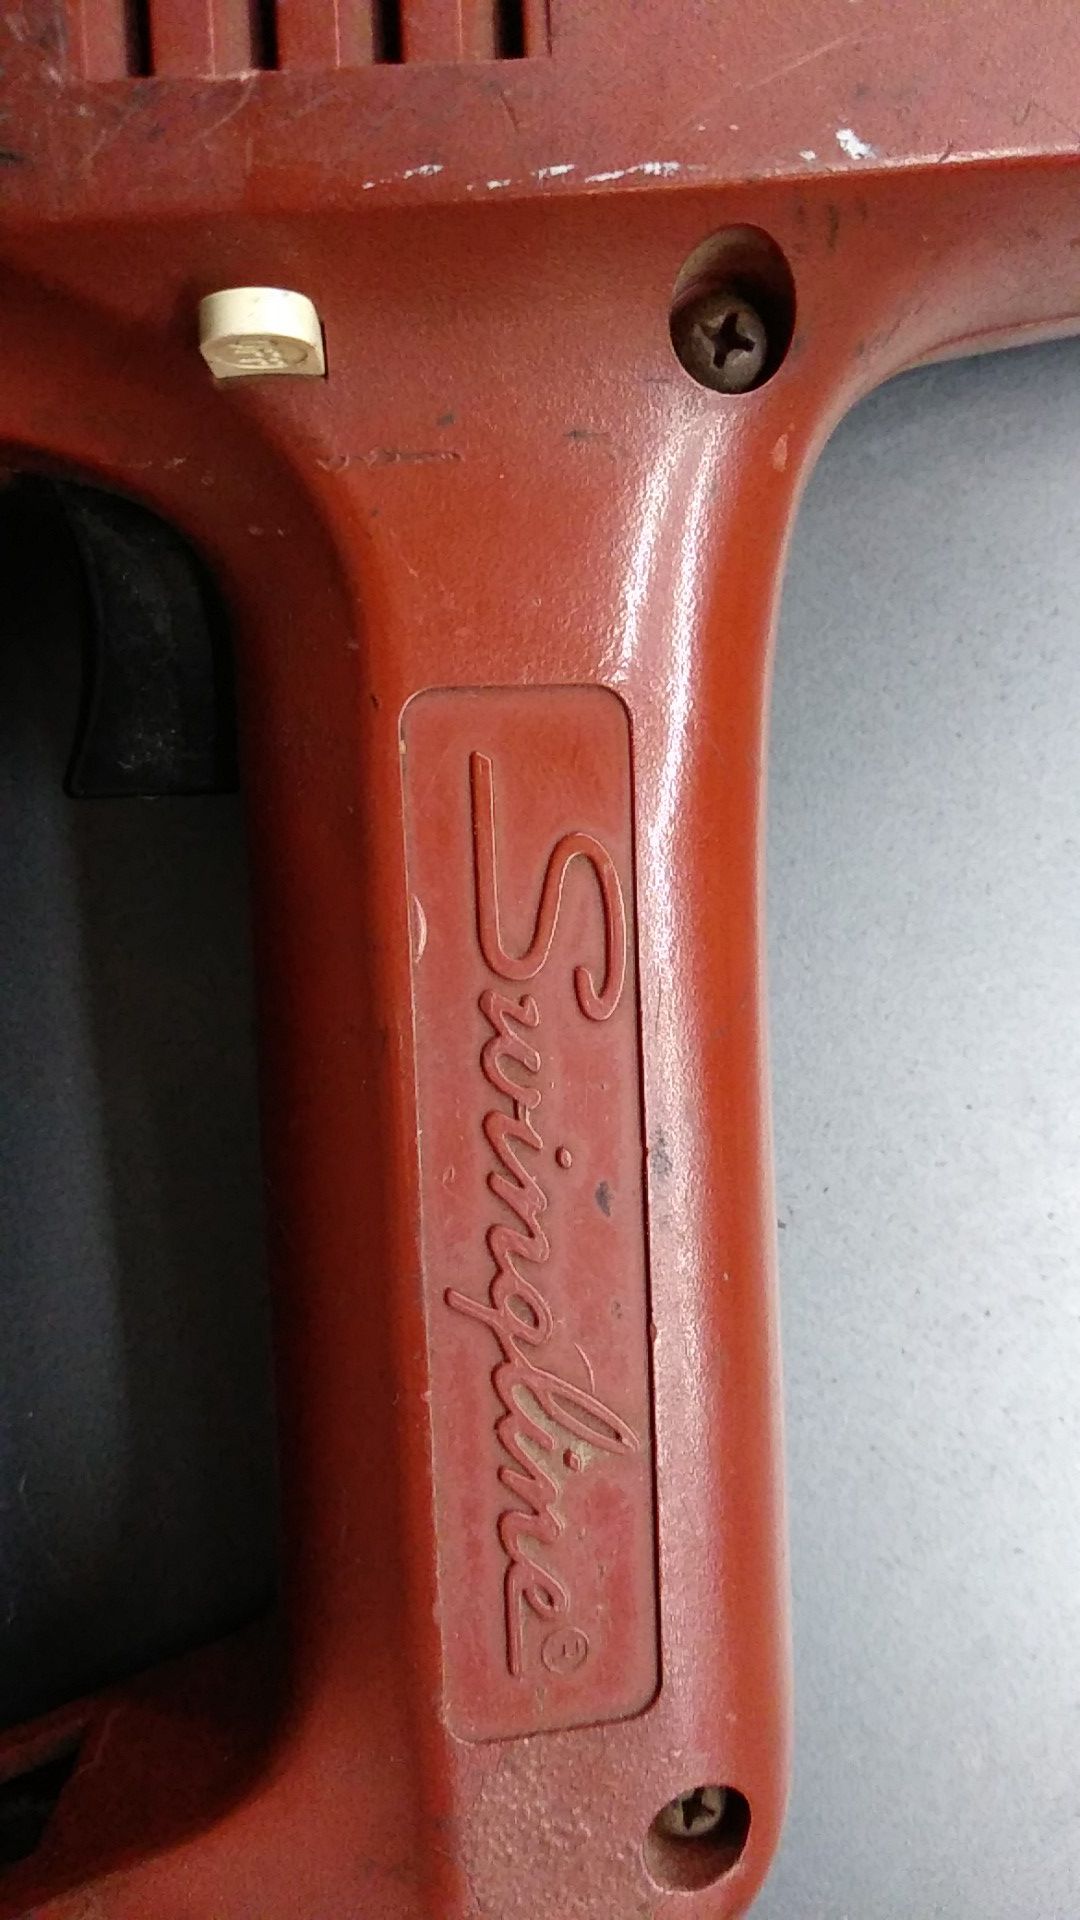 Swingline automatic stapler